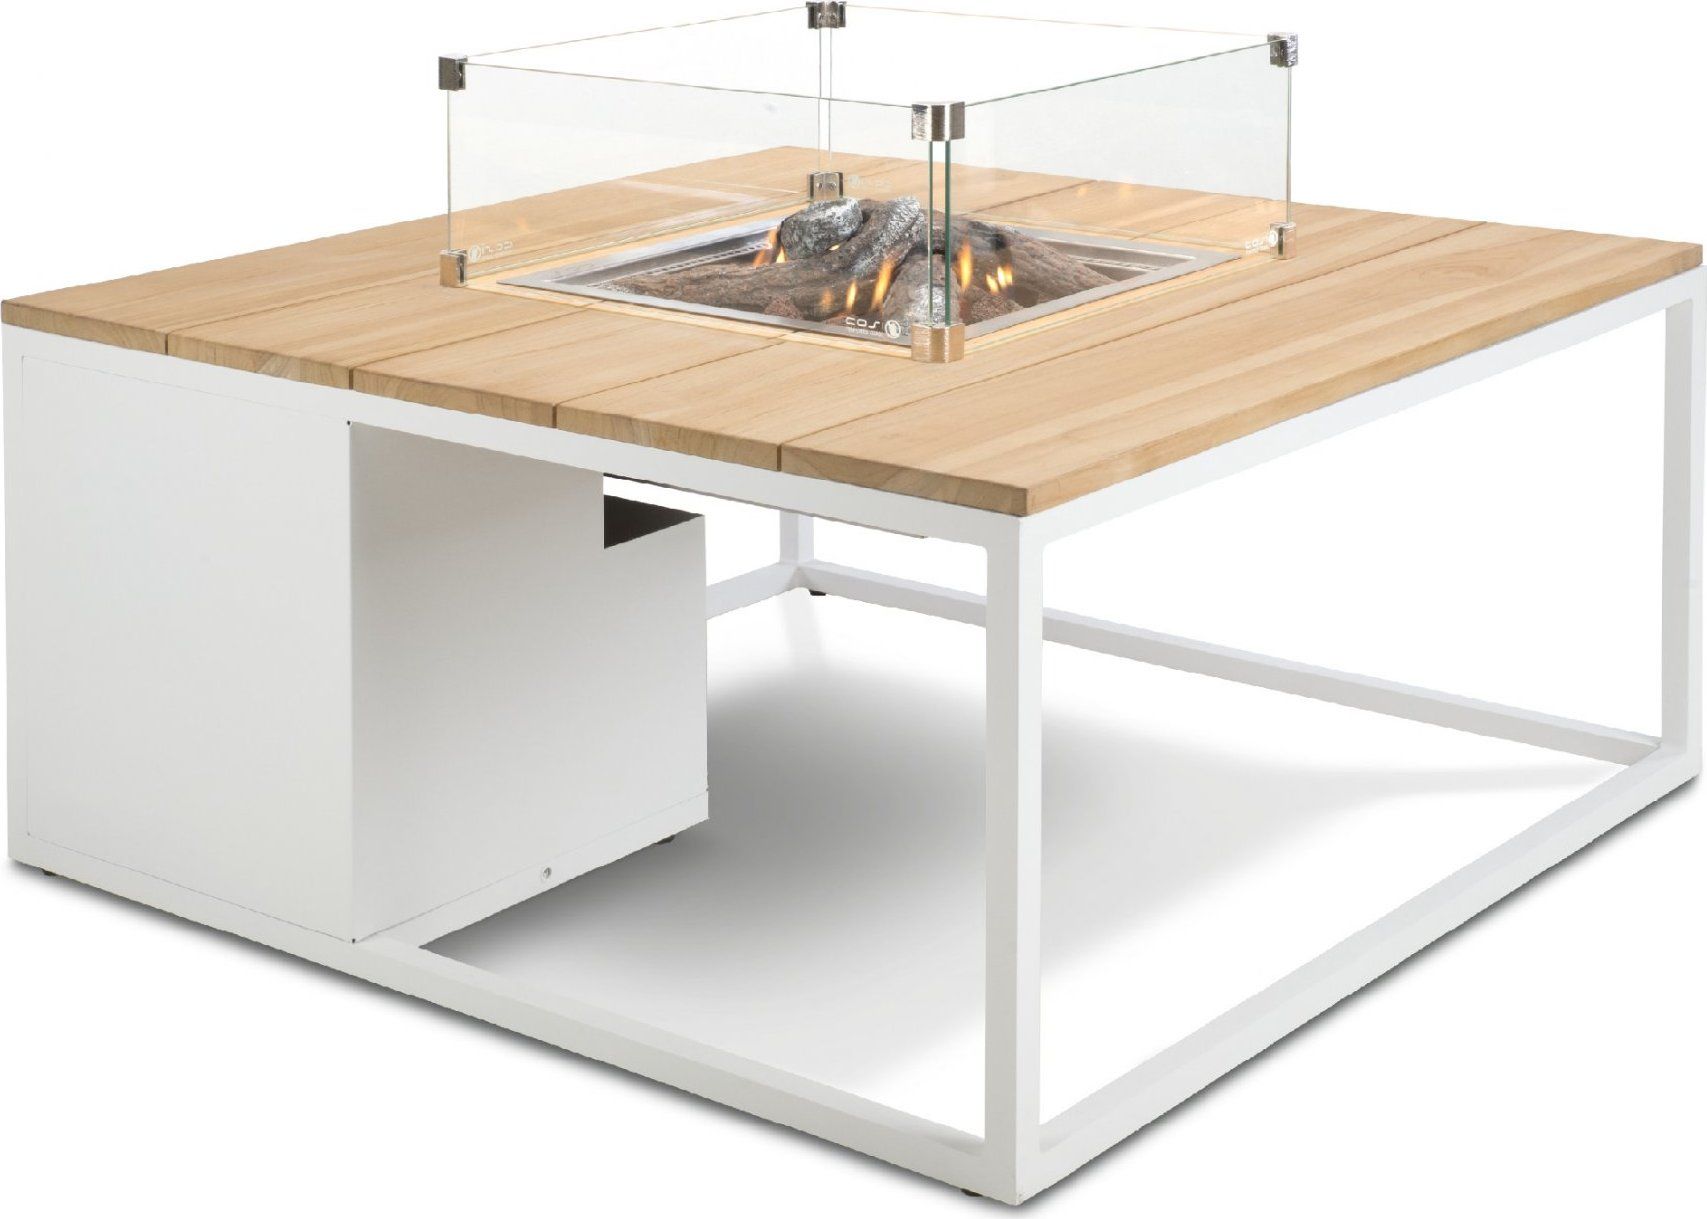 Stůl s plynovým ohništěm COSI- typ Cosiloft 100 bílý rám / deska teak Mdum - M DUM.cz